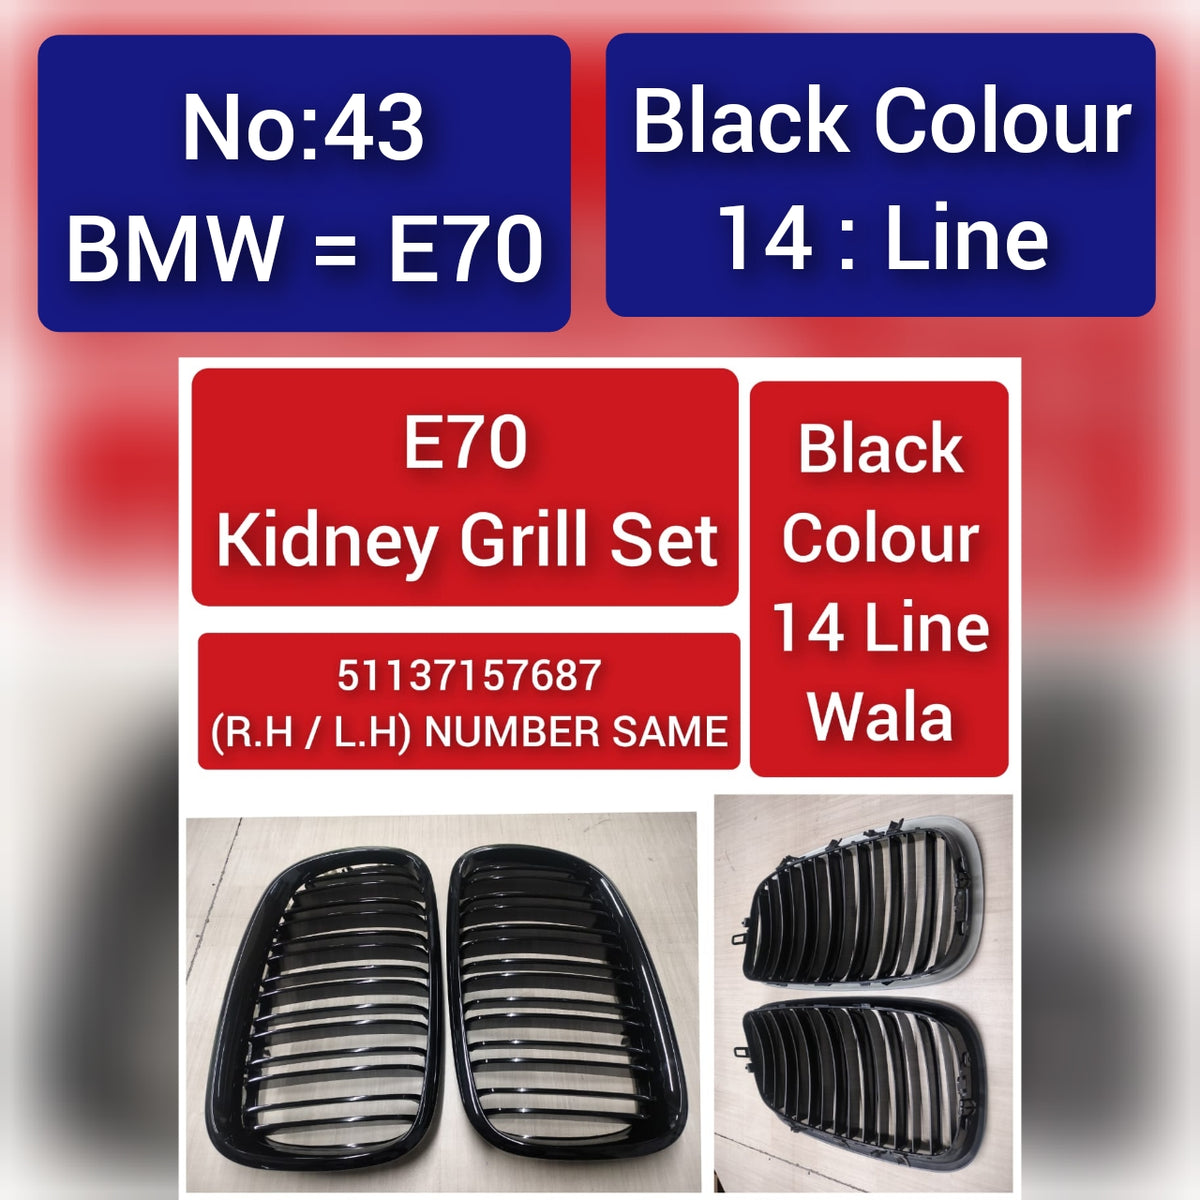 BMW = E70 Black Colour 14: Line E70 Kidney Grill Set 51137157687 (R.H/L.H) NUMBER SAME Black Colour 14 Line Wala Tag 43